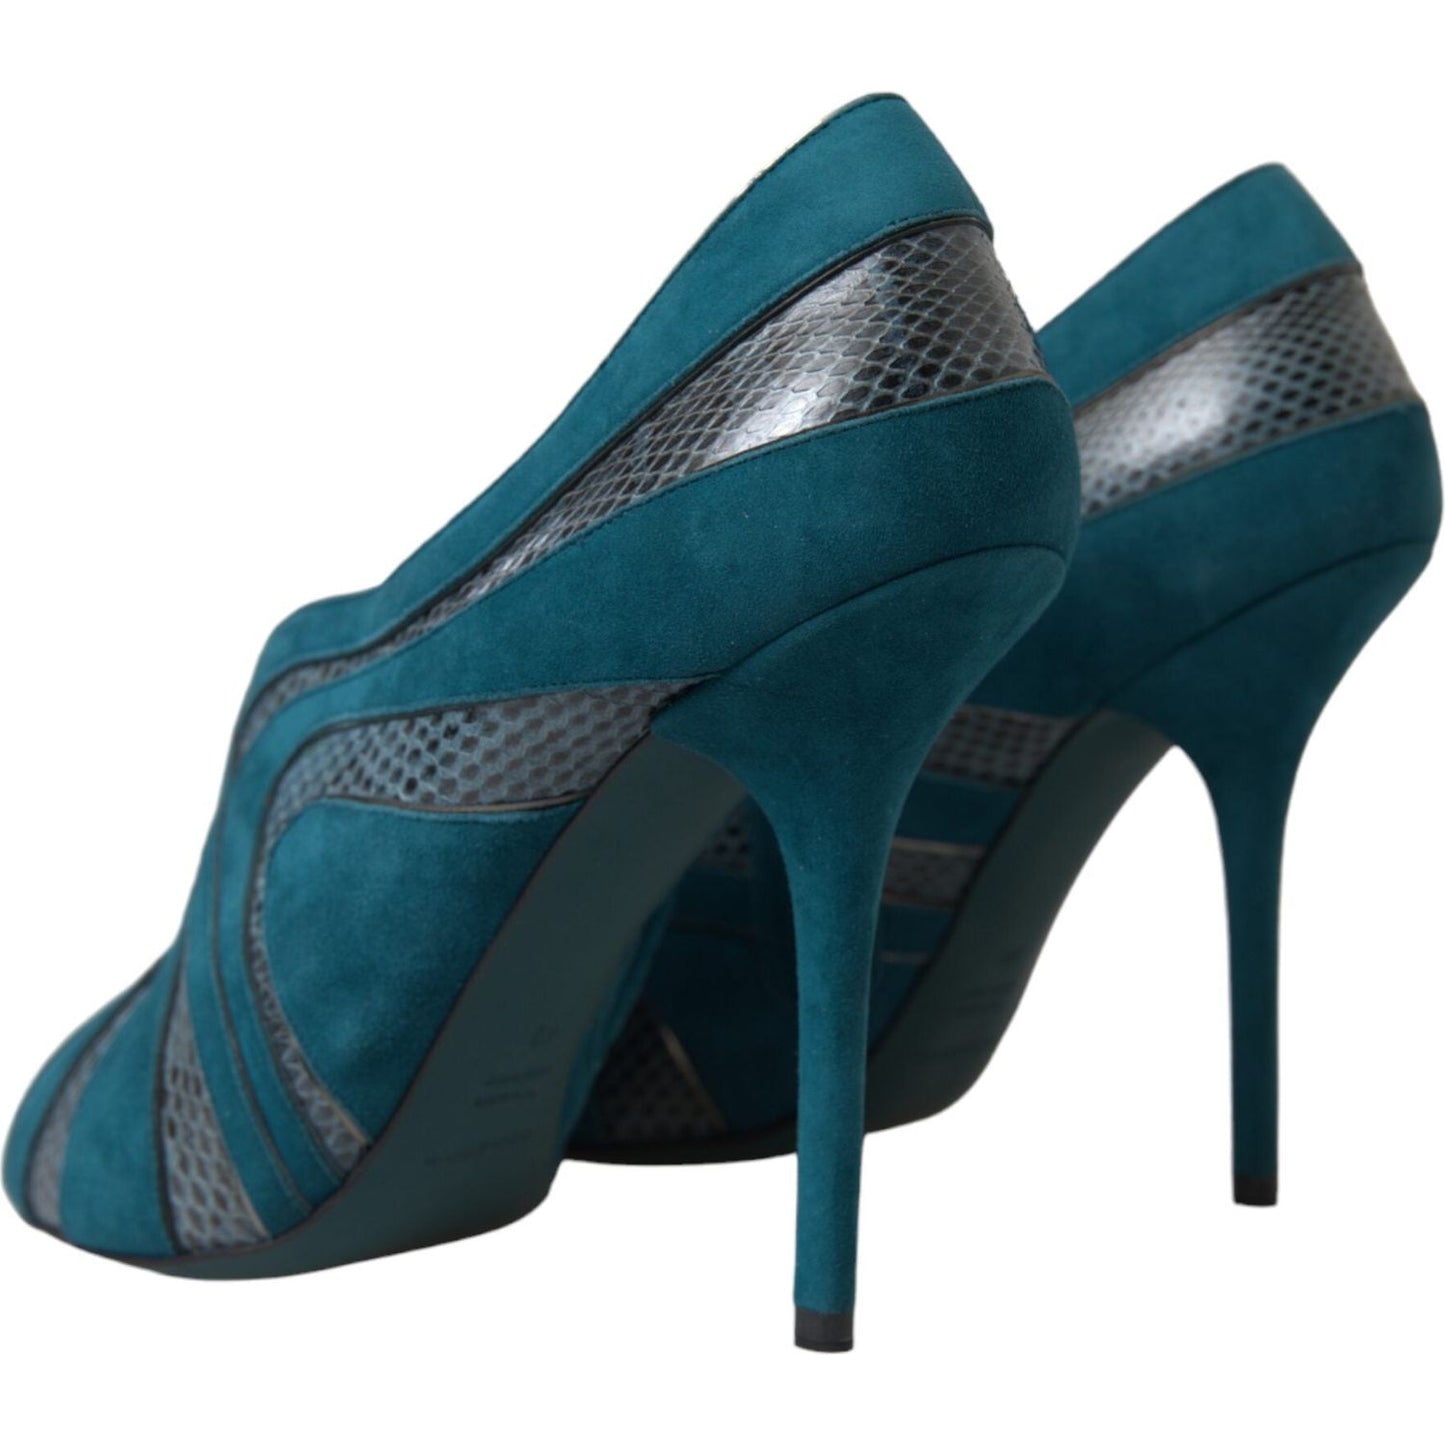 Dolce & Gabbana Teal Suede Peep Toe Heels Pumps teal-suede-leather-peep-toe-heels-pumps-shoes 465A2709-BG-scaled-6da5d02d-c88.jpg